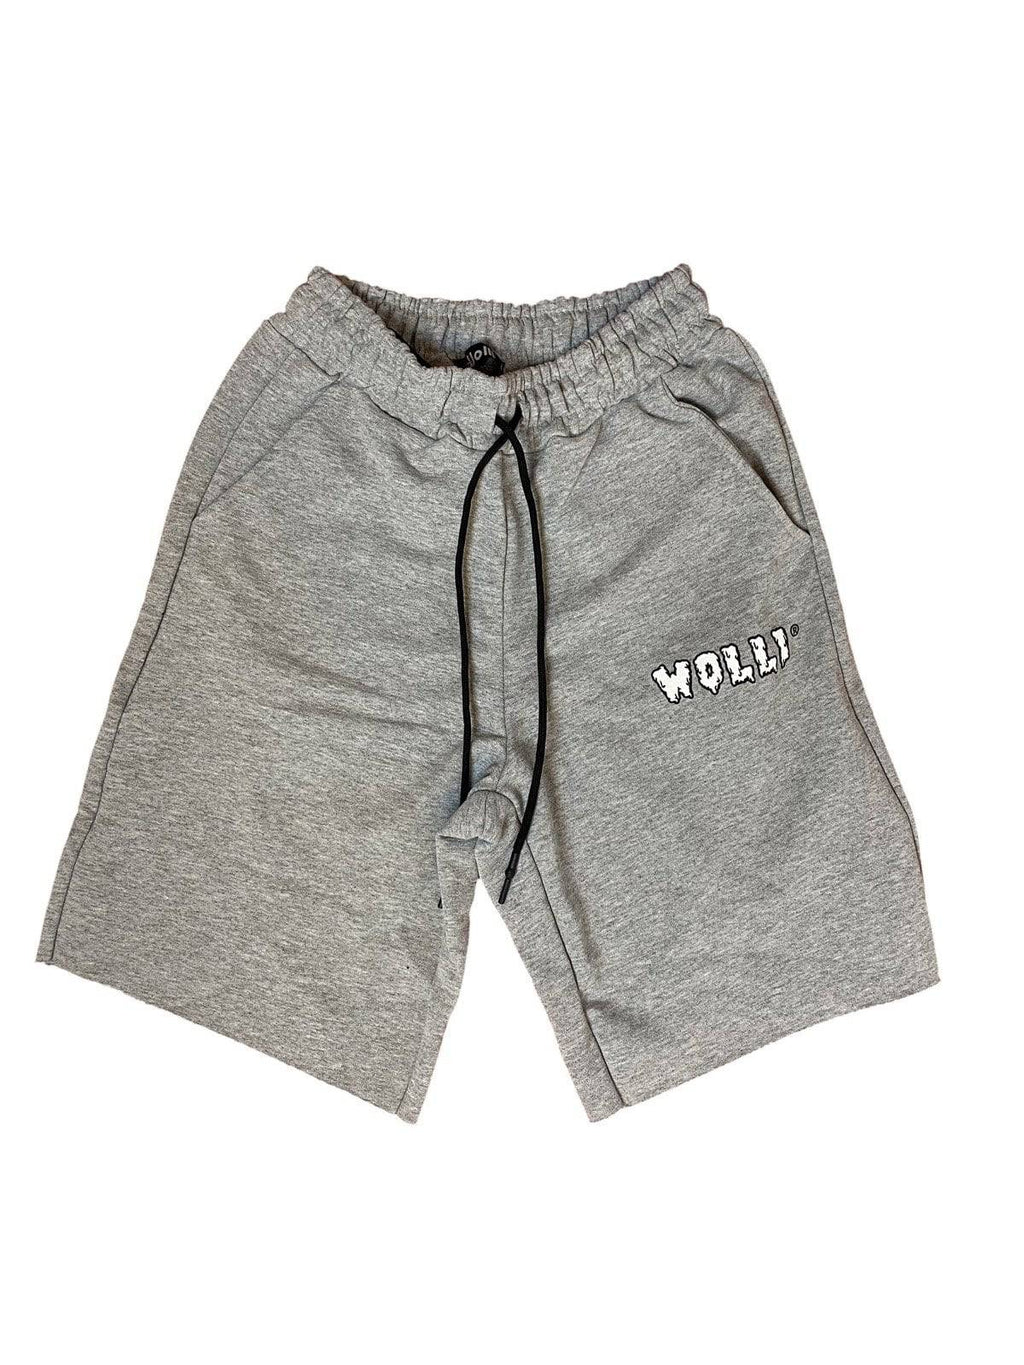 Pantalone corto grigio mélange - Wolli®